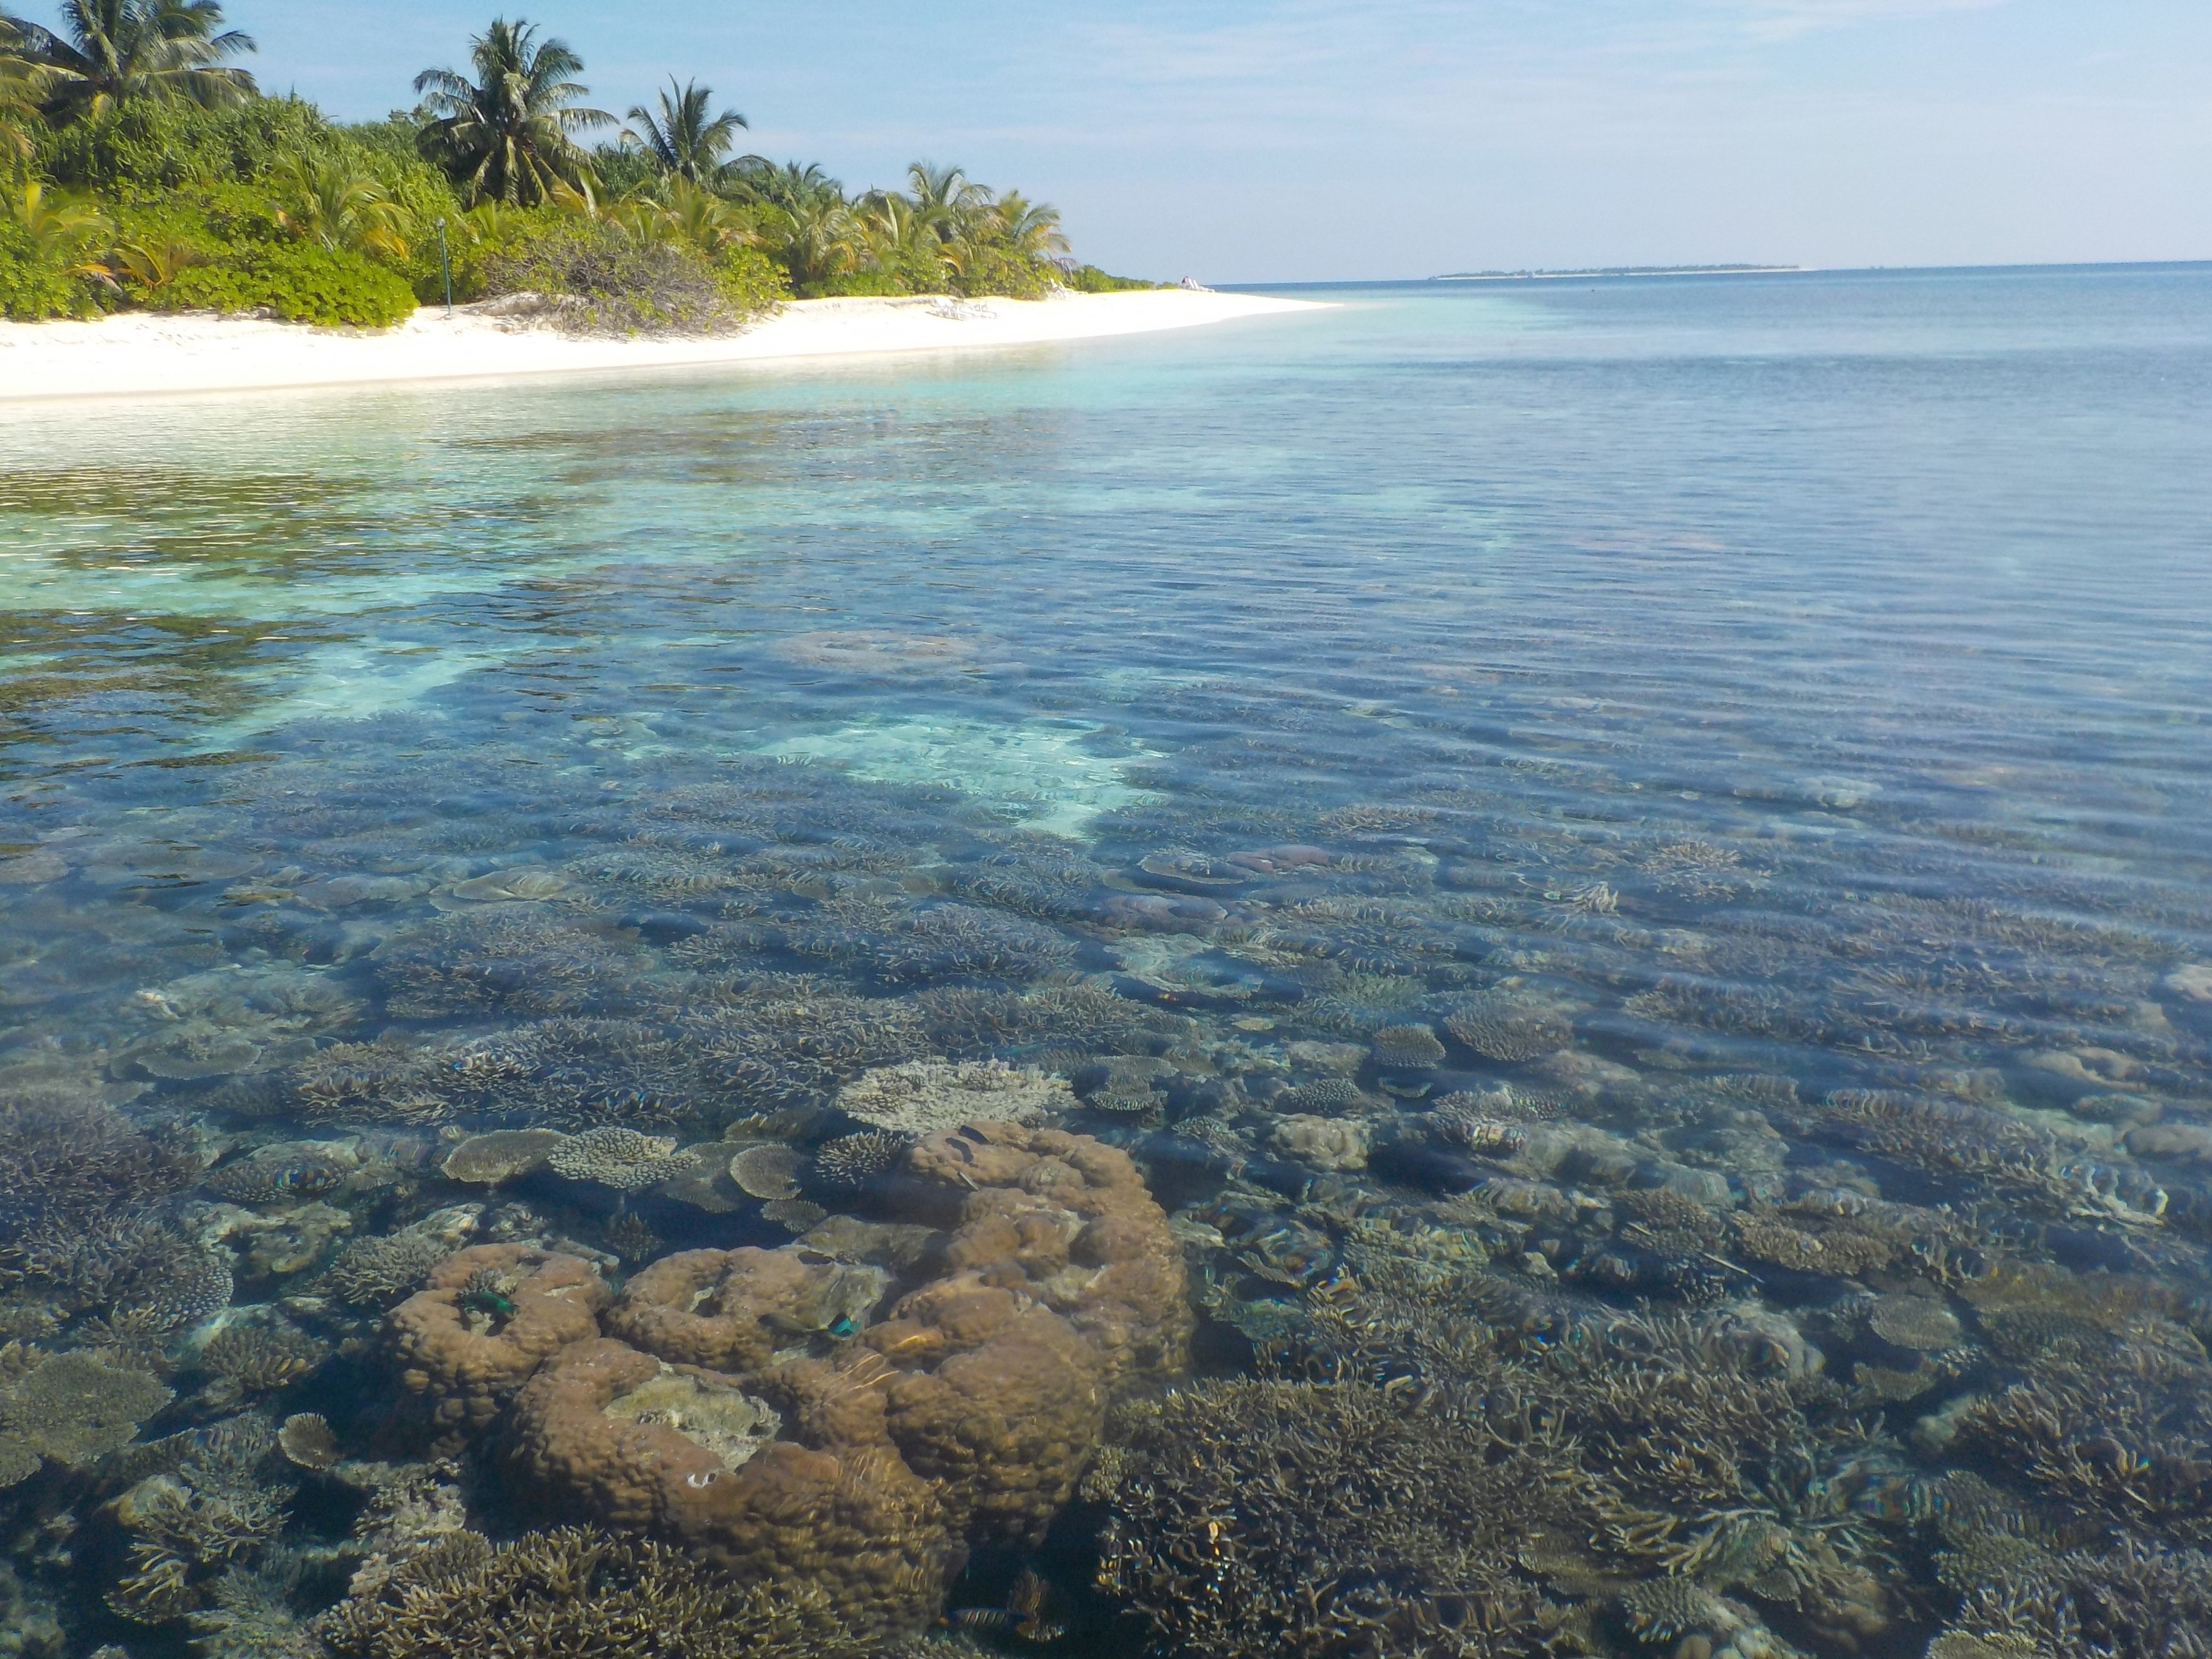 Island вода. Мальдивы Лагуна риф. Остров риф (Reef Island). Барьерный риф Мальдивы. Мальдивы коралловые острова.